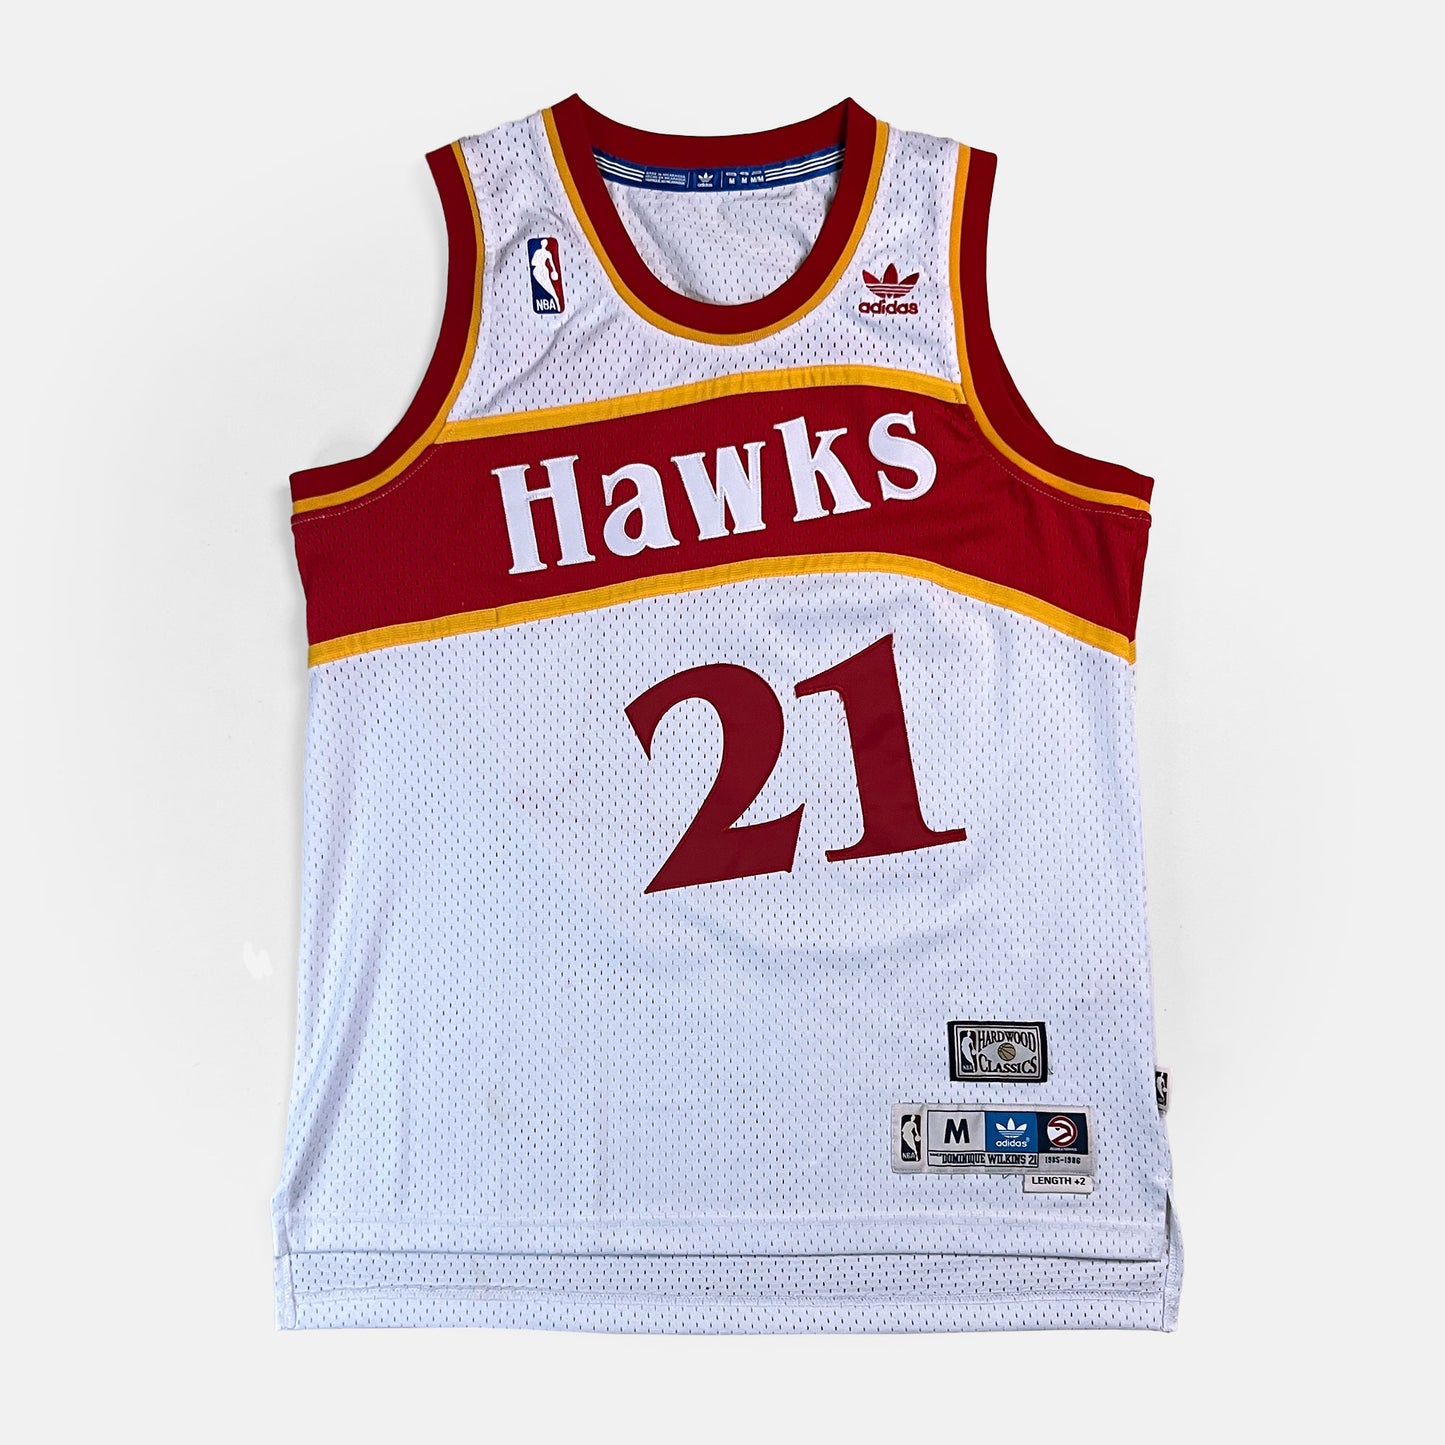 Atlanta Hawks - Dominique Wilkins - Größe M - Adidas - NBA Trikot